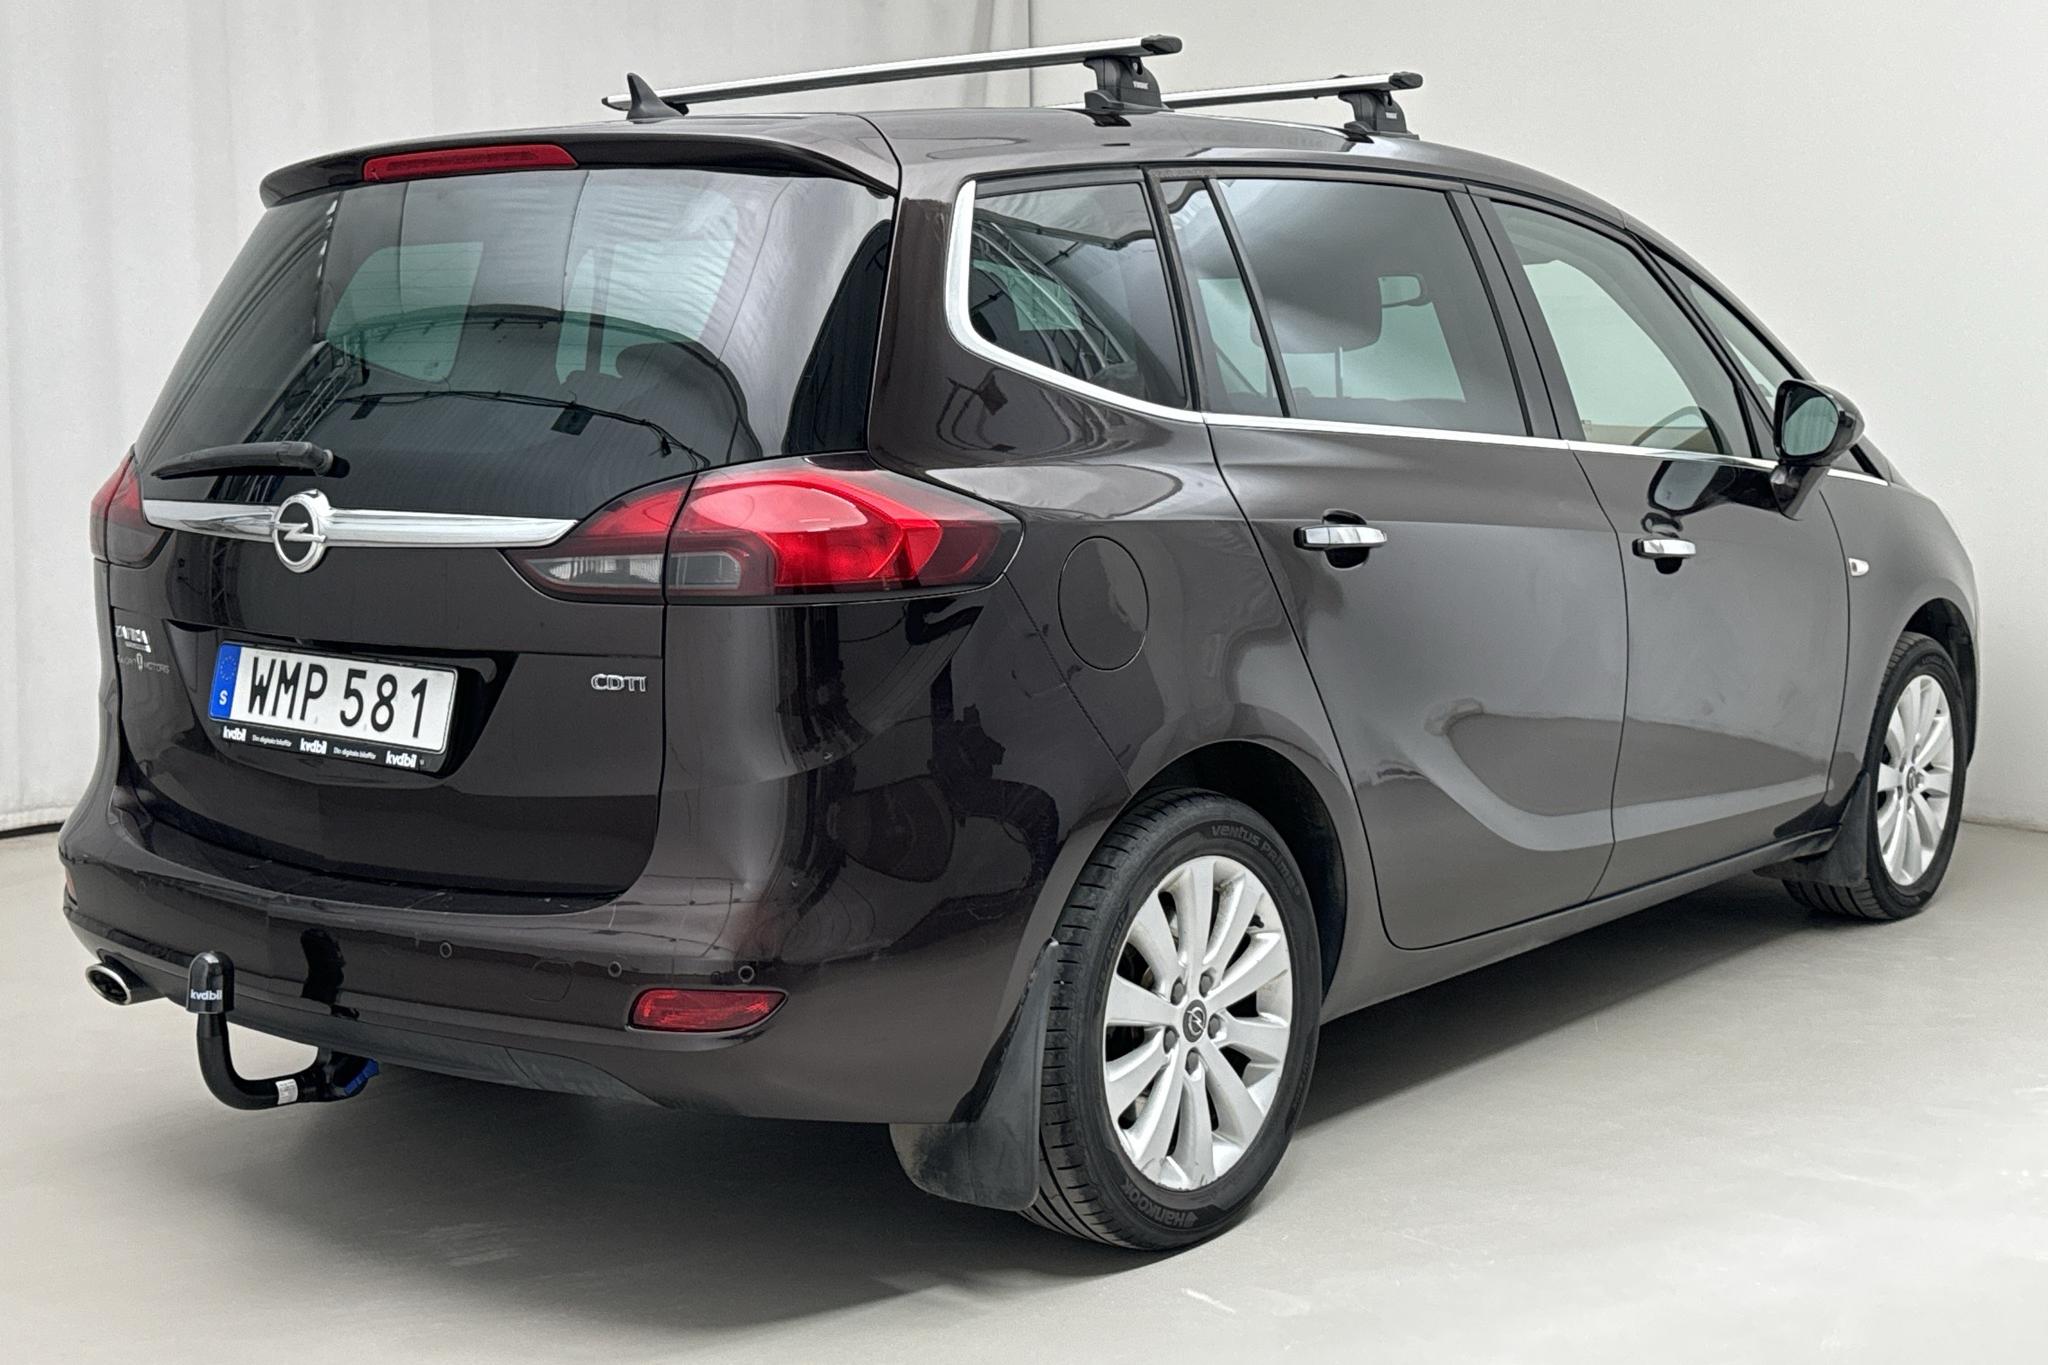 Opel Zafira Tourer 2.0 ECOTEC (165hk) - 132 040 km - Automatic - brown - 2014